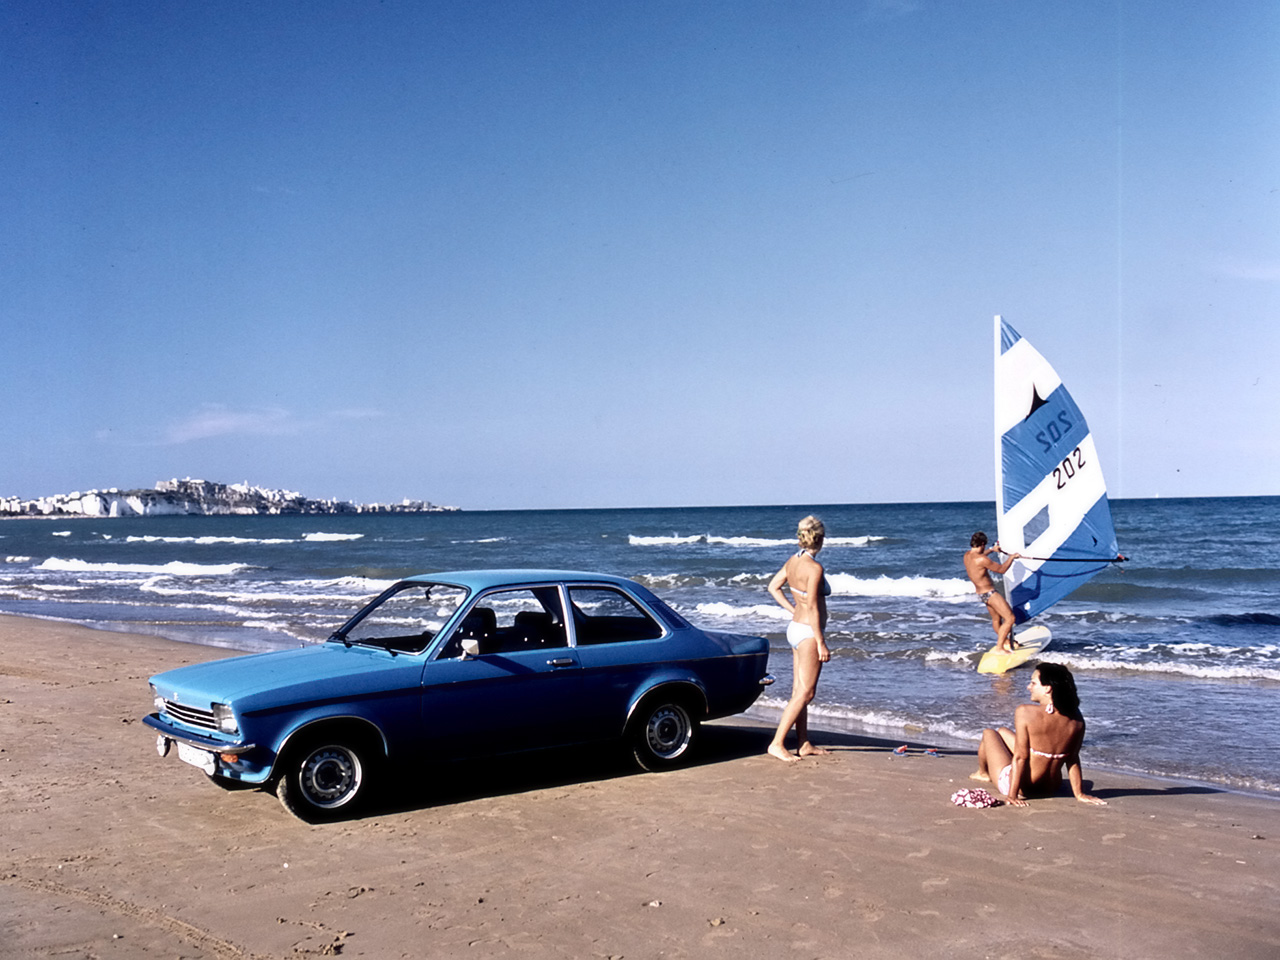 Opel Period Photos of Summer - Opel Kadett C Luxus, 1973-79 - 1 - 1280x960 -